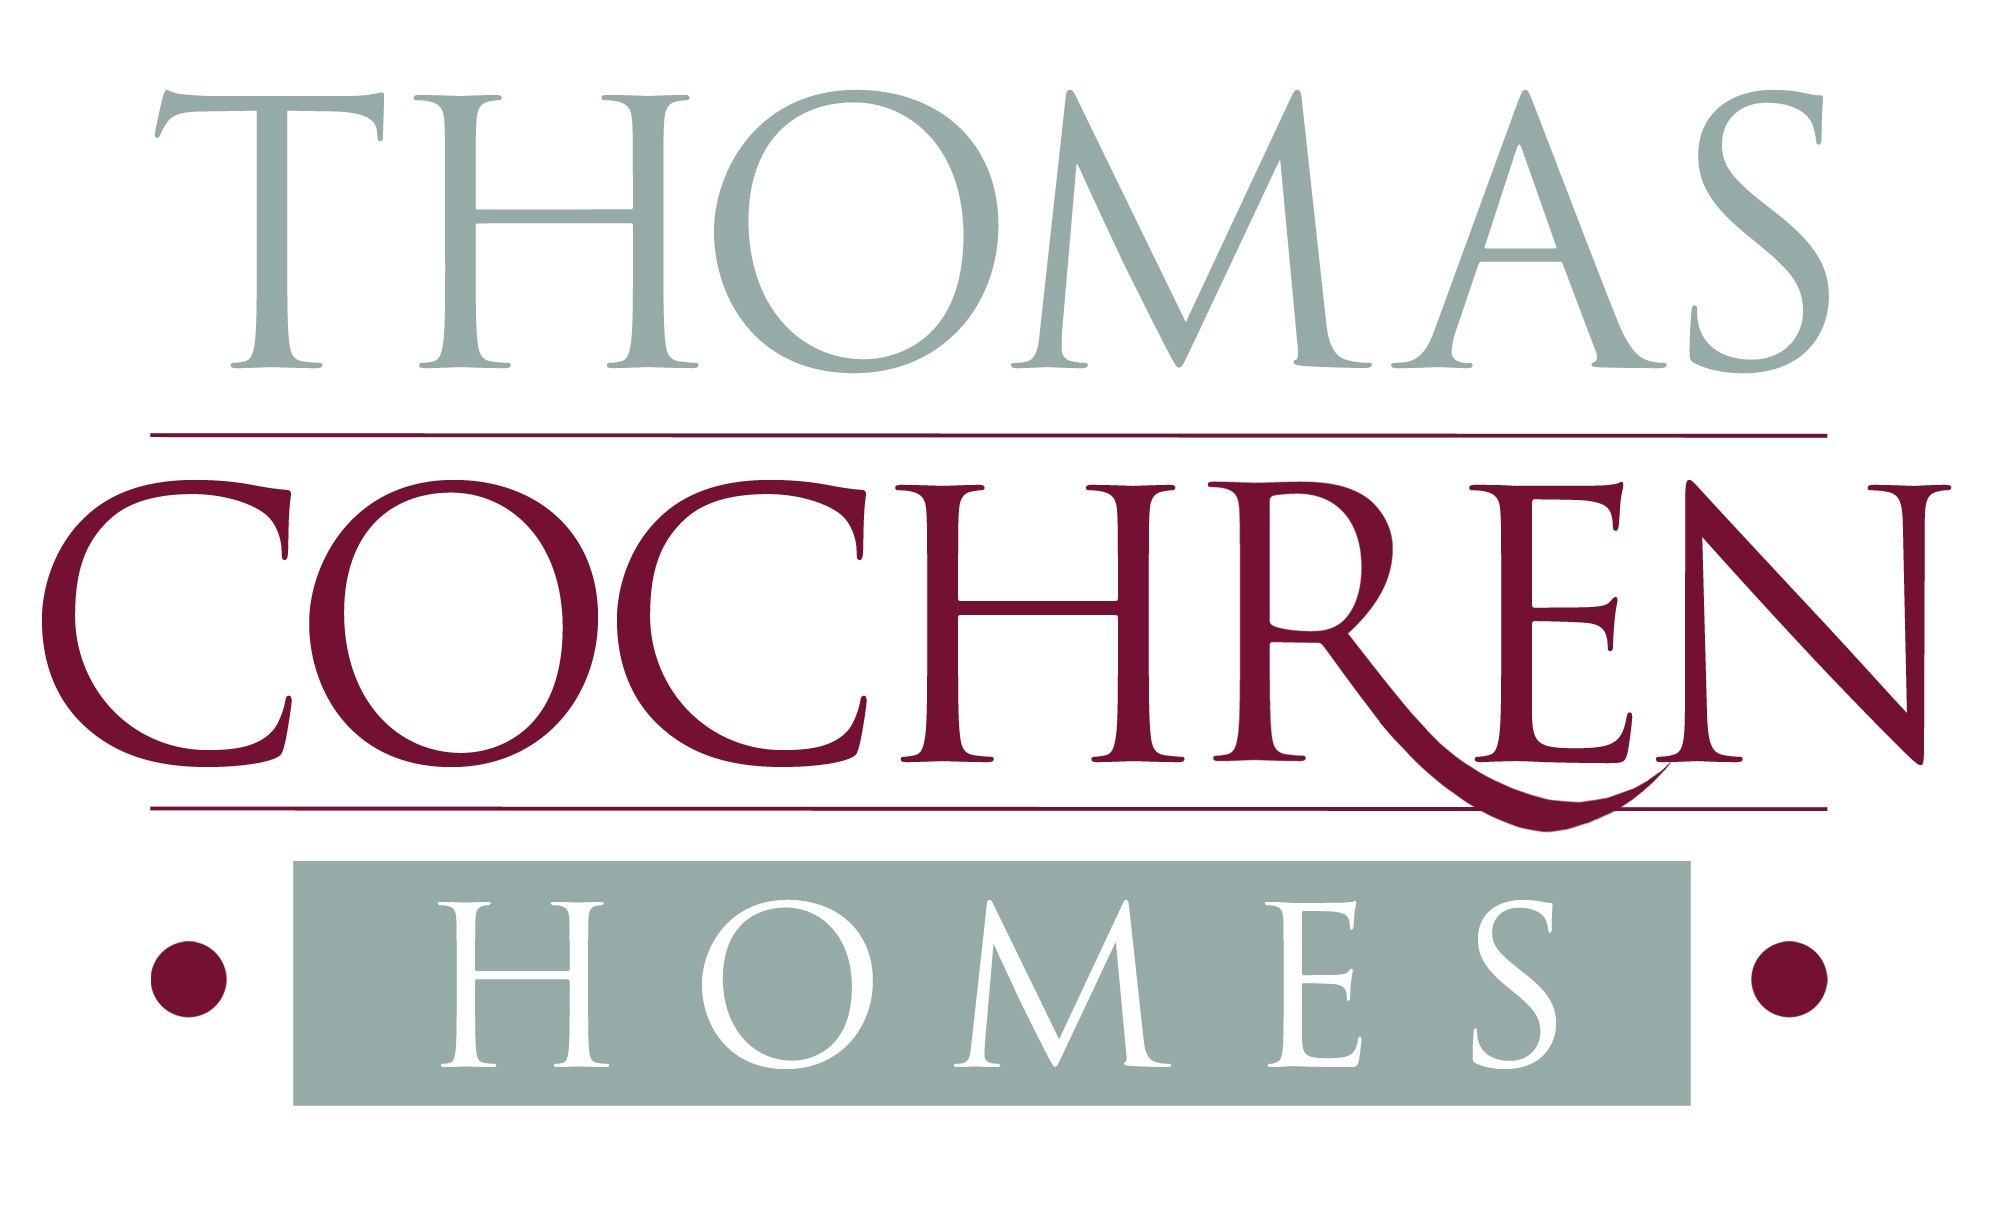 Thomas Cochren Homes